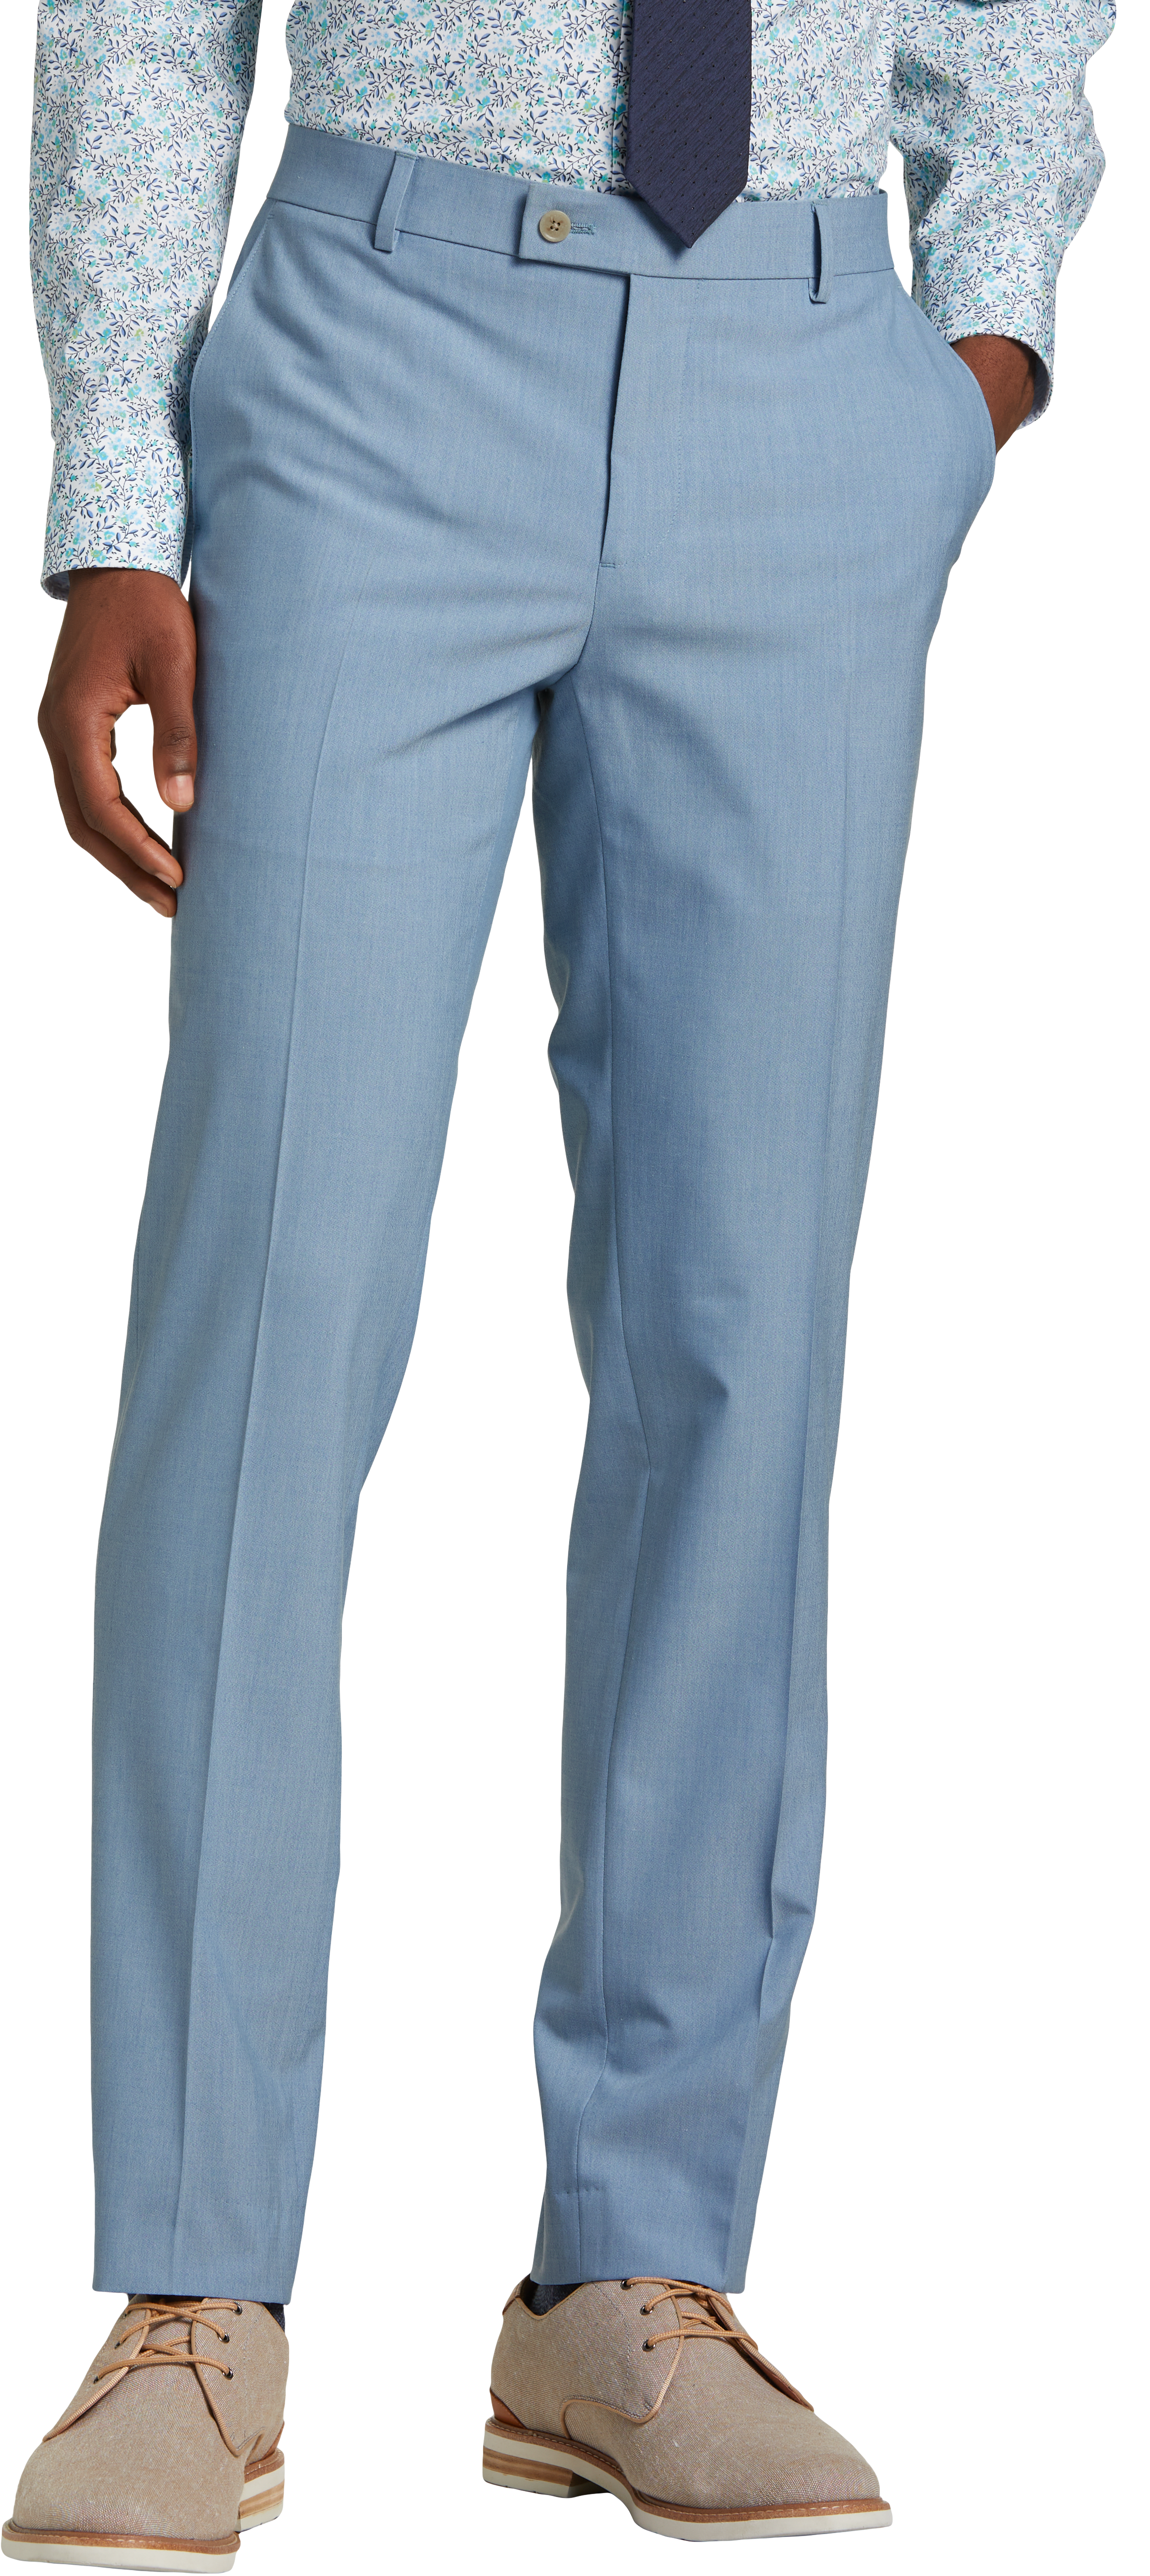 Egara Skinny Fit Suit Separates Pants, Light Blue